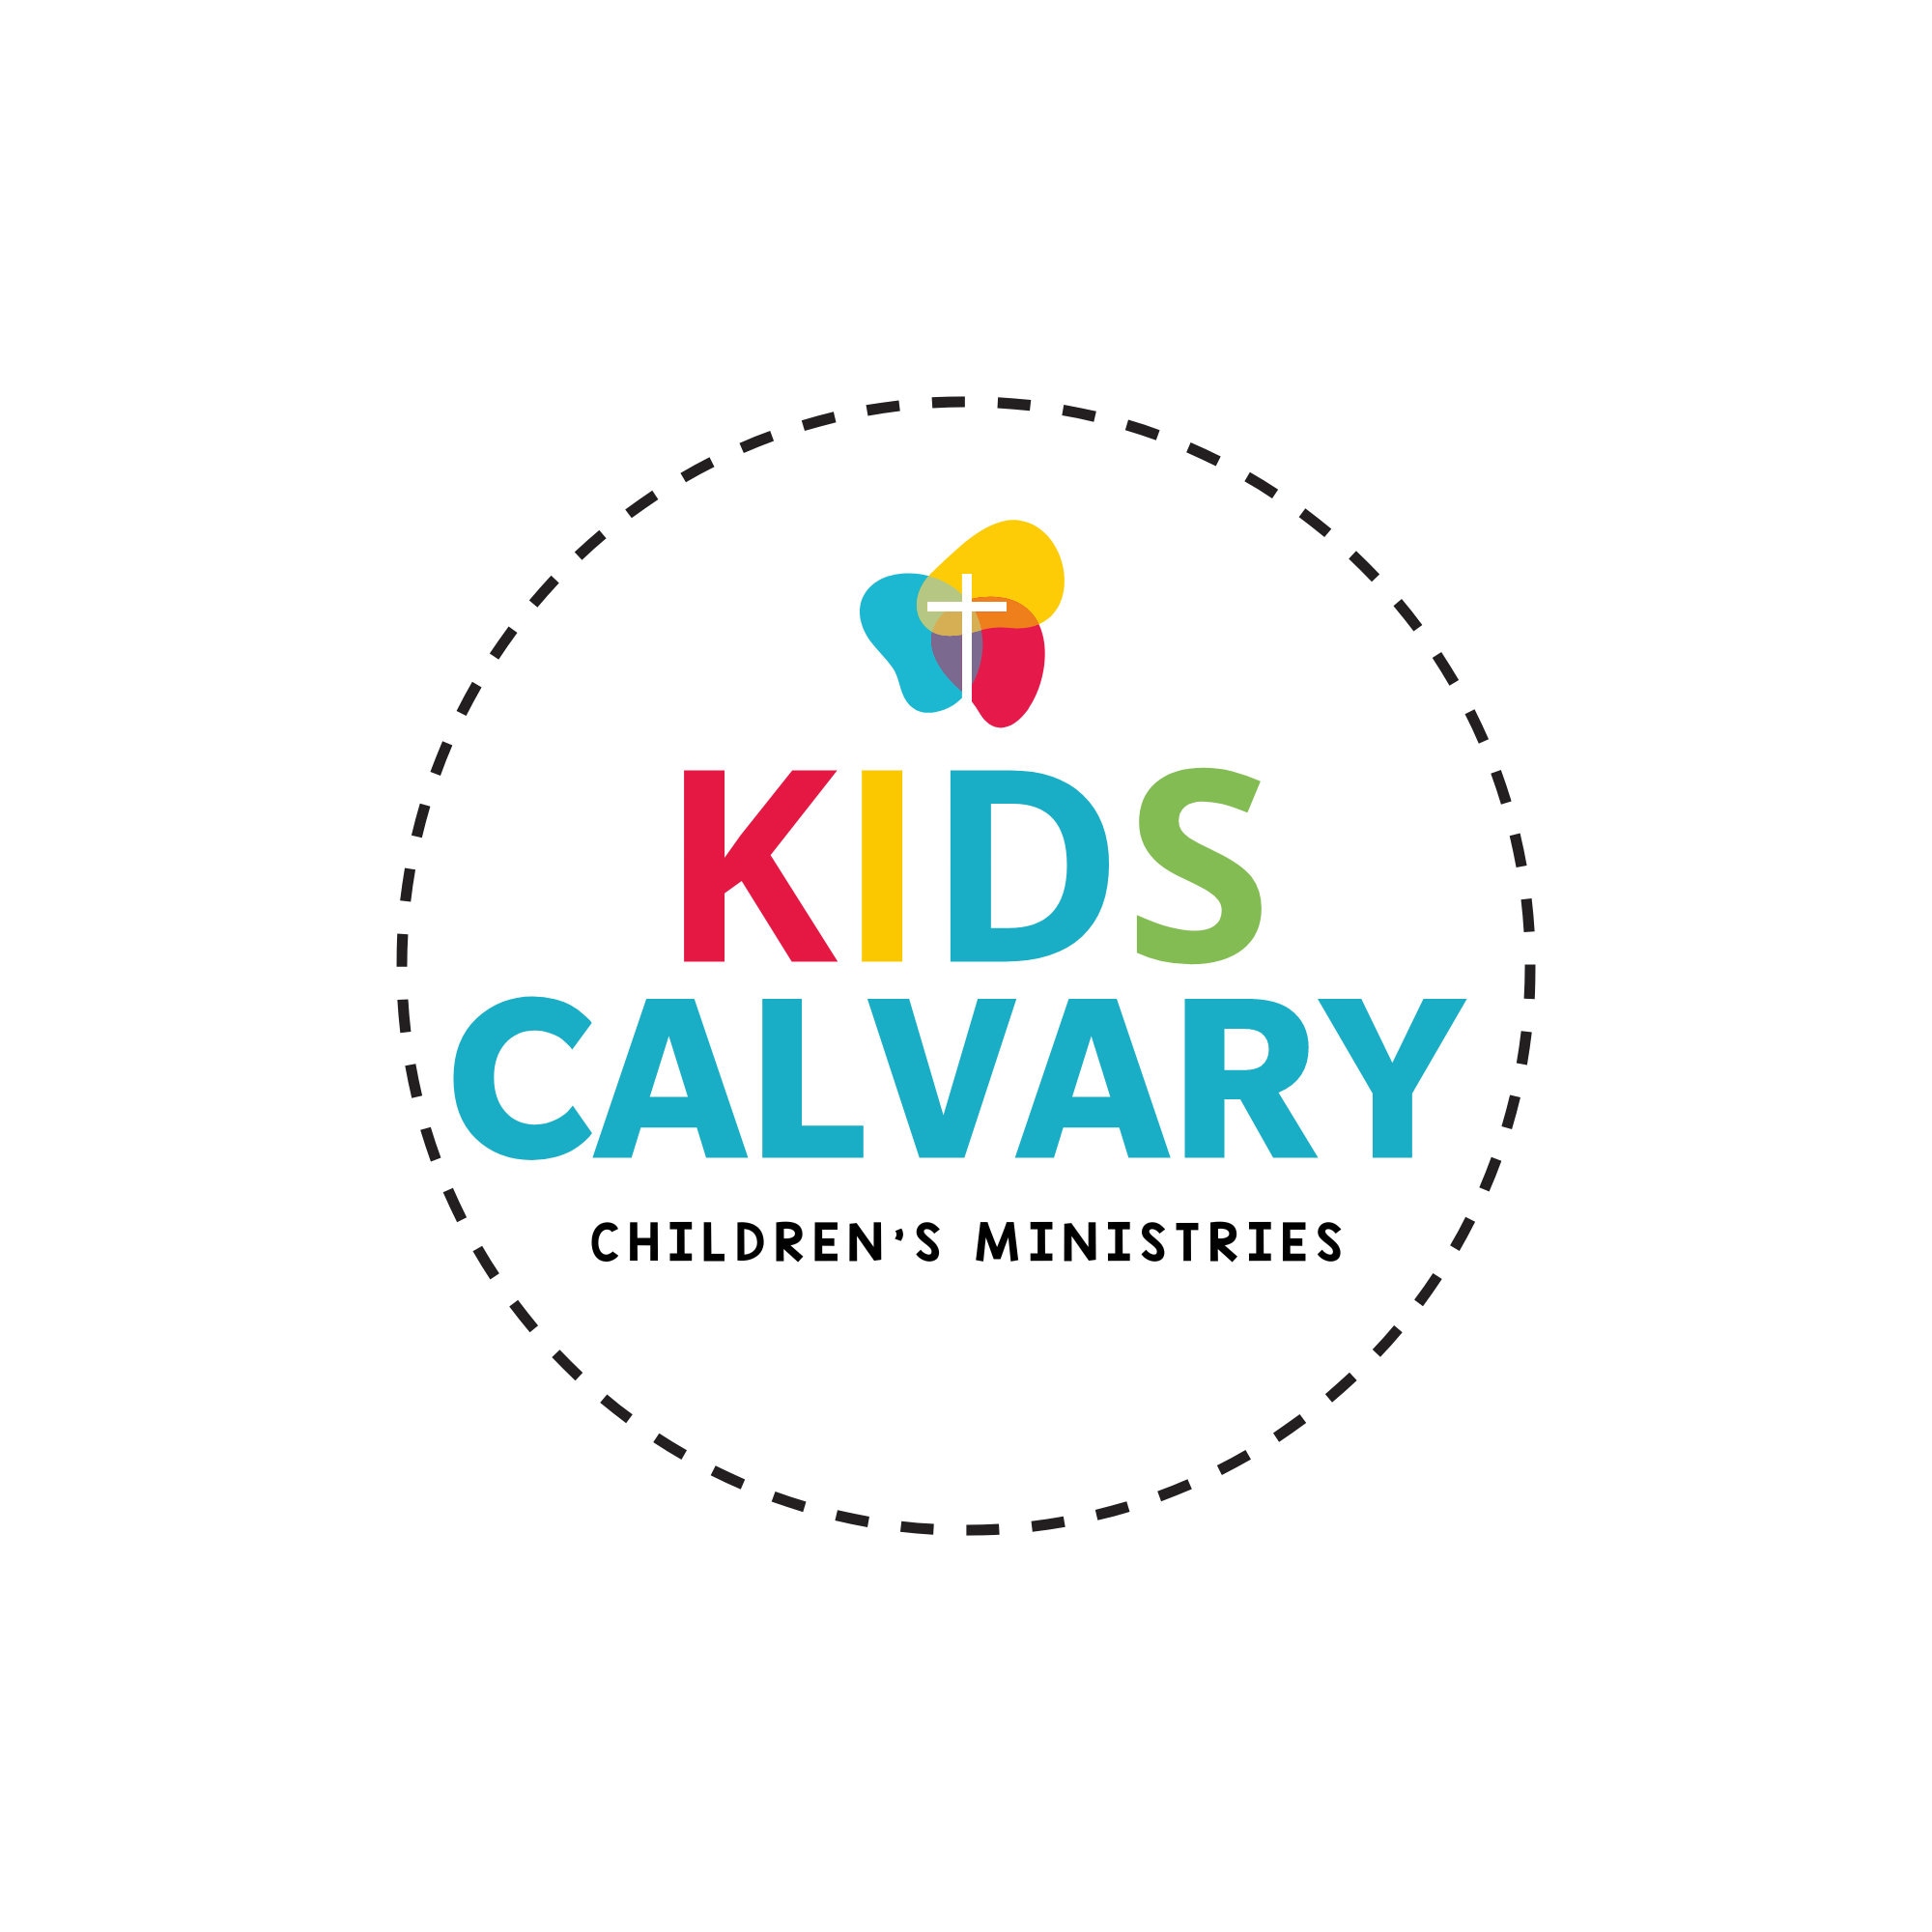 Details 124+ ministry logo